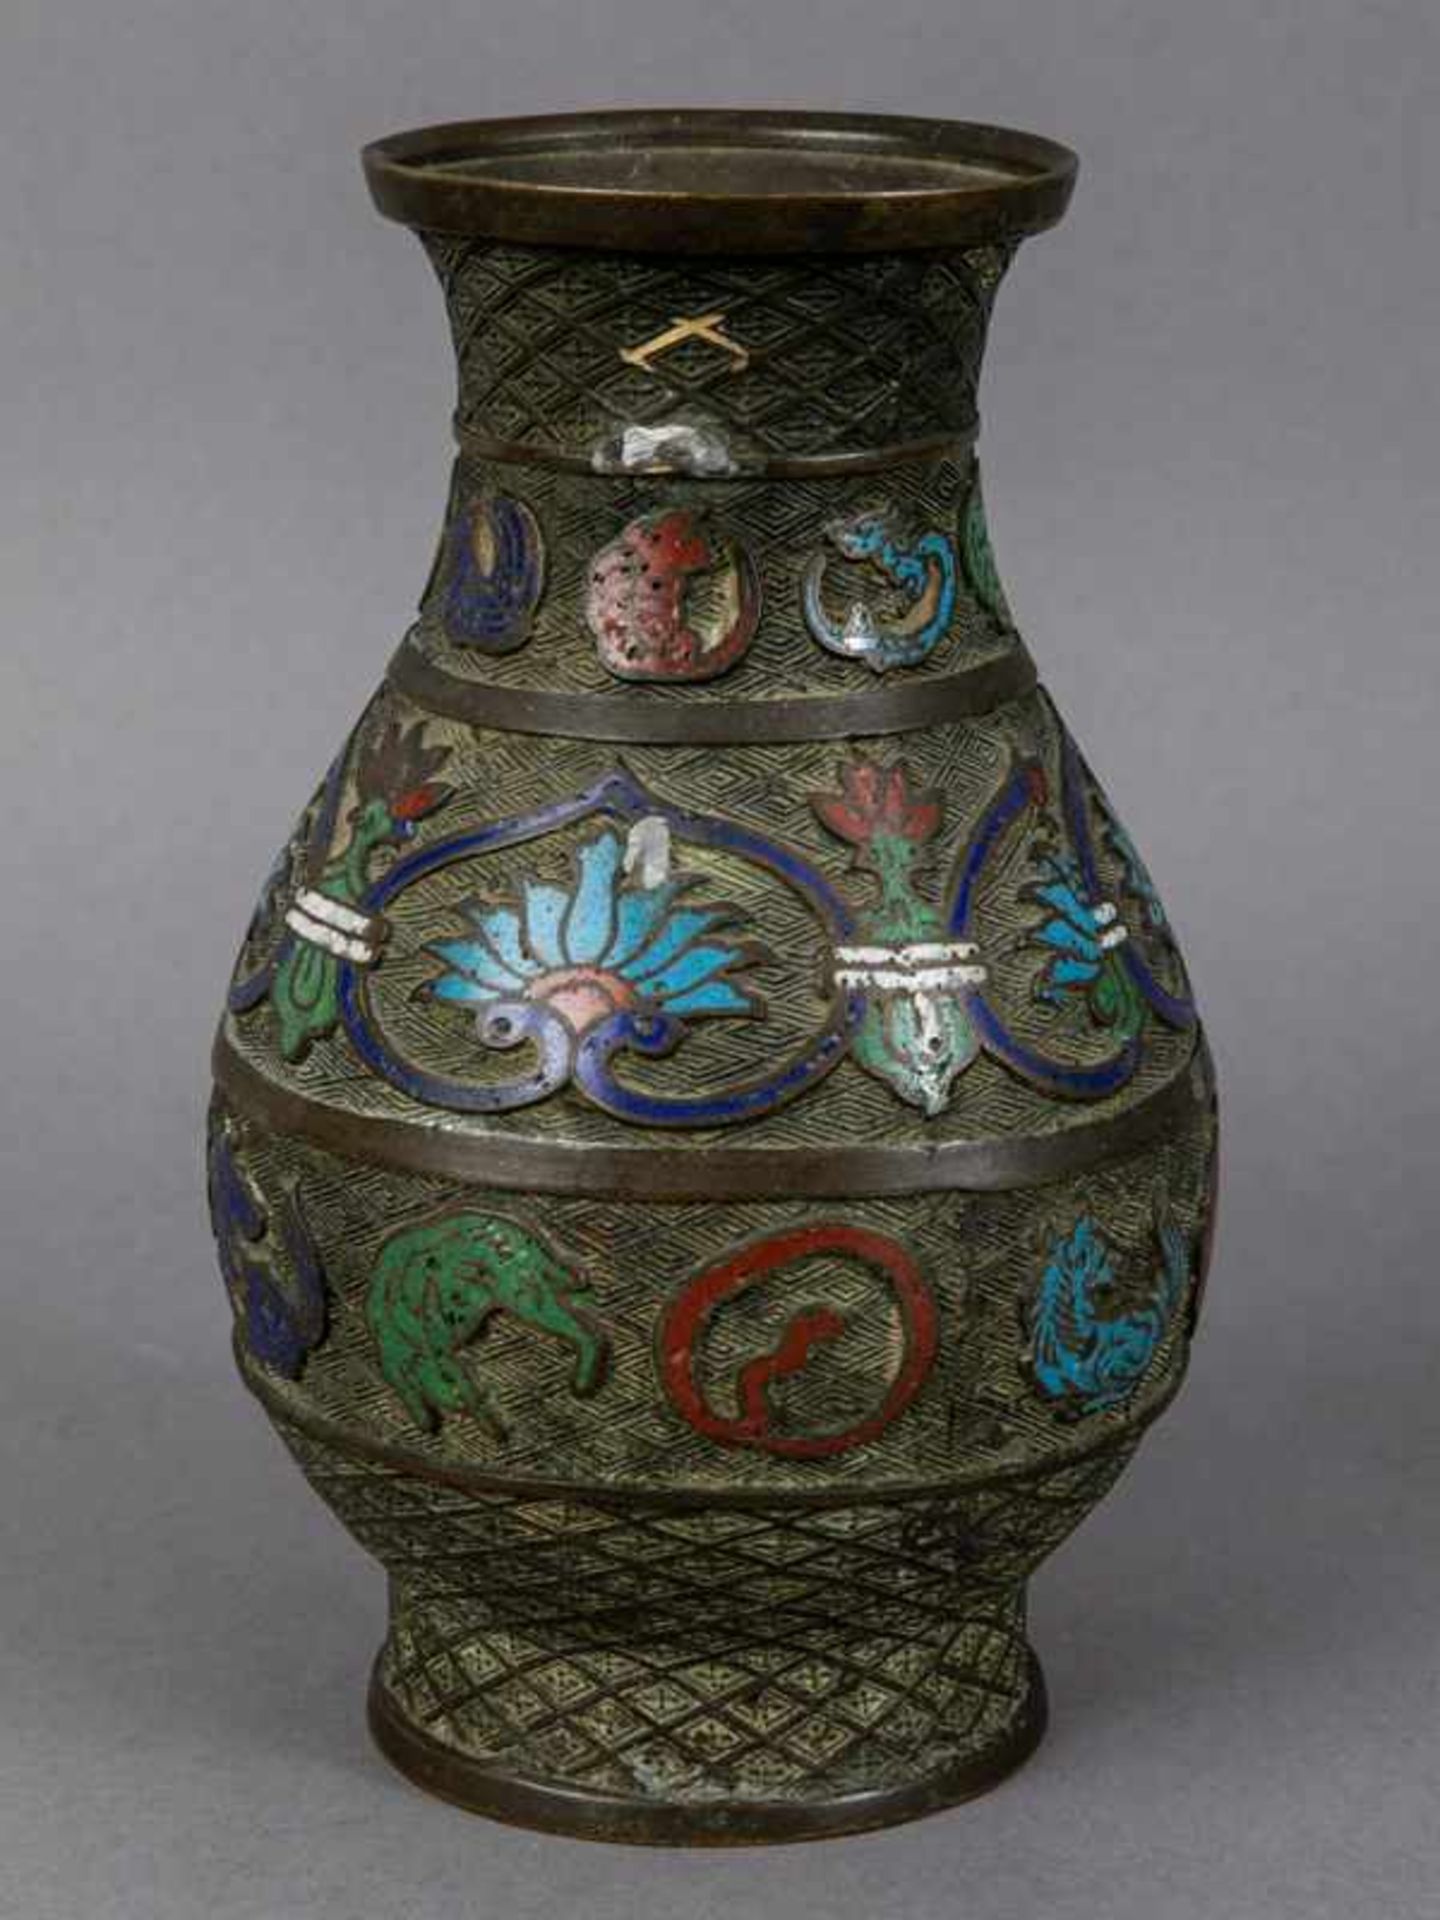 Vase mit Emaille-Cloisonné-Dekor, China, wohl 19. Jh. Vase mit Emaille-Cloisonné-Dekor, China, wohl - Image 2 of 4